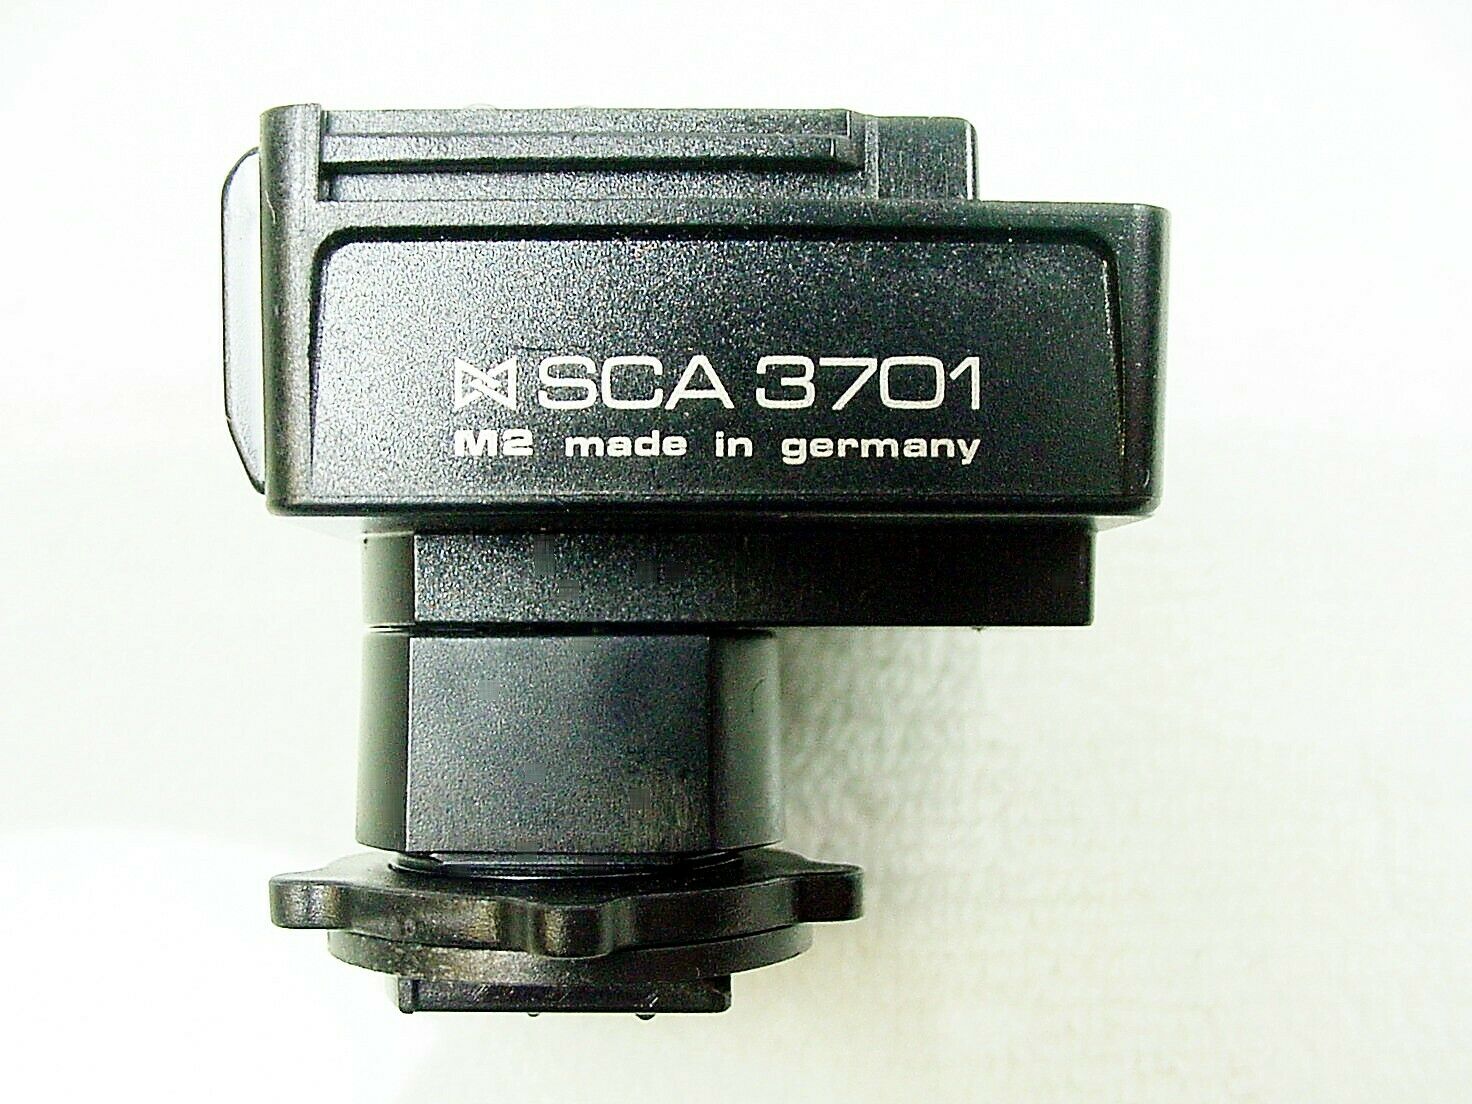 Metz Sca 3701 M2 Pentaz Af Adapter | Sf, Pz, Z, Mz Models | Nos | New | $49.95 |